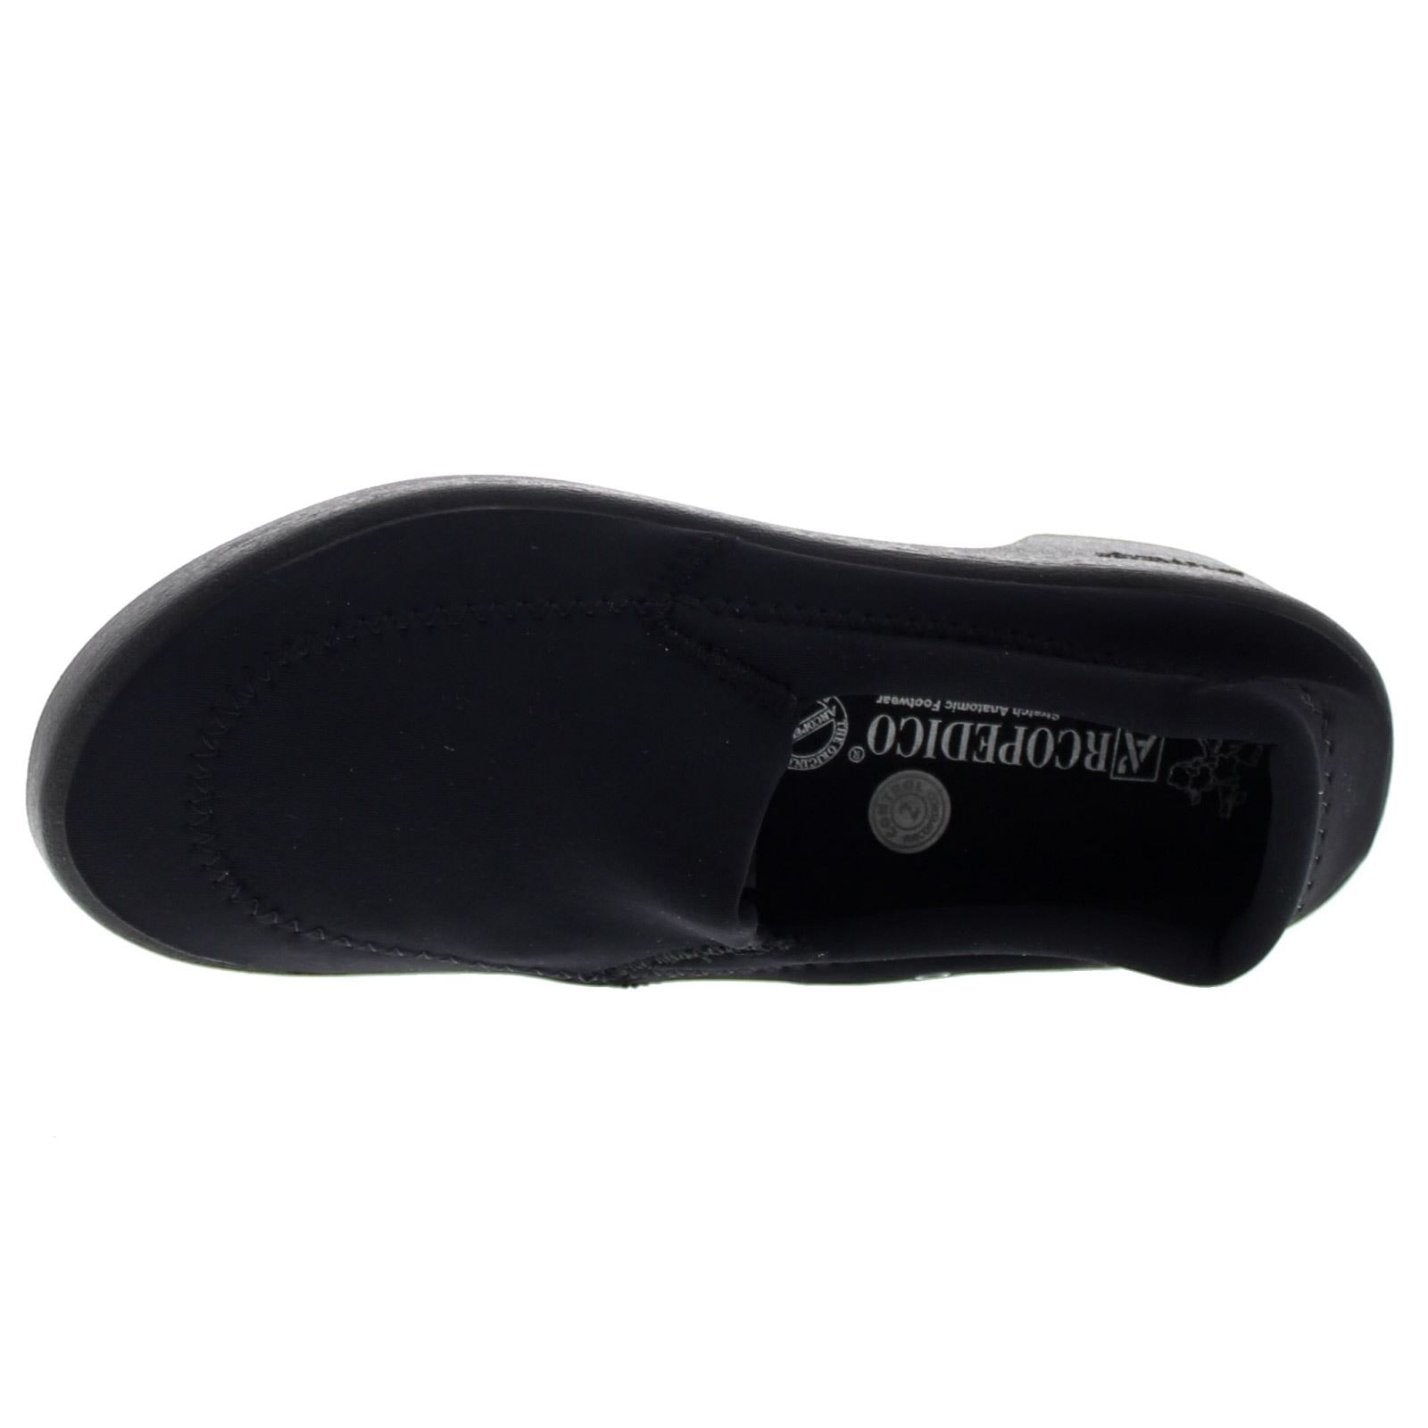 Arcopedico Lyra Lycra Flats Women's Slip-on Shoes#color_black